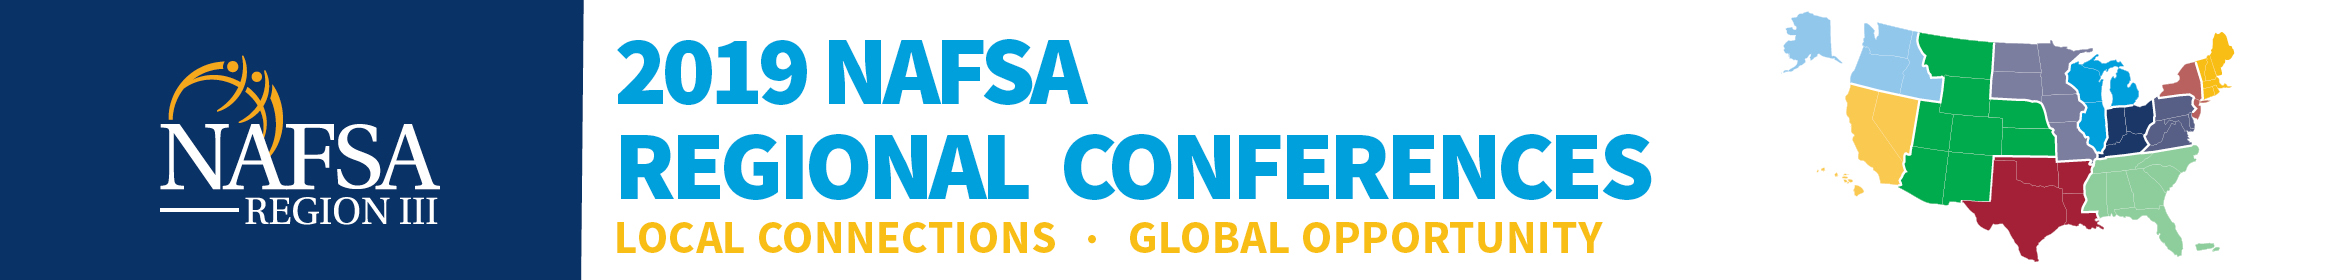 2019 NAFSA Region III Conference Main banner